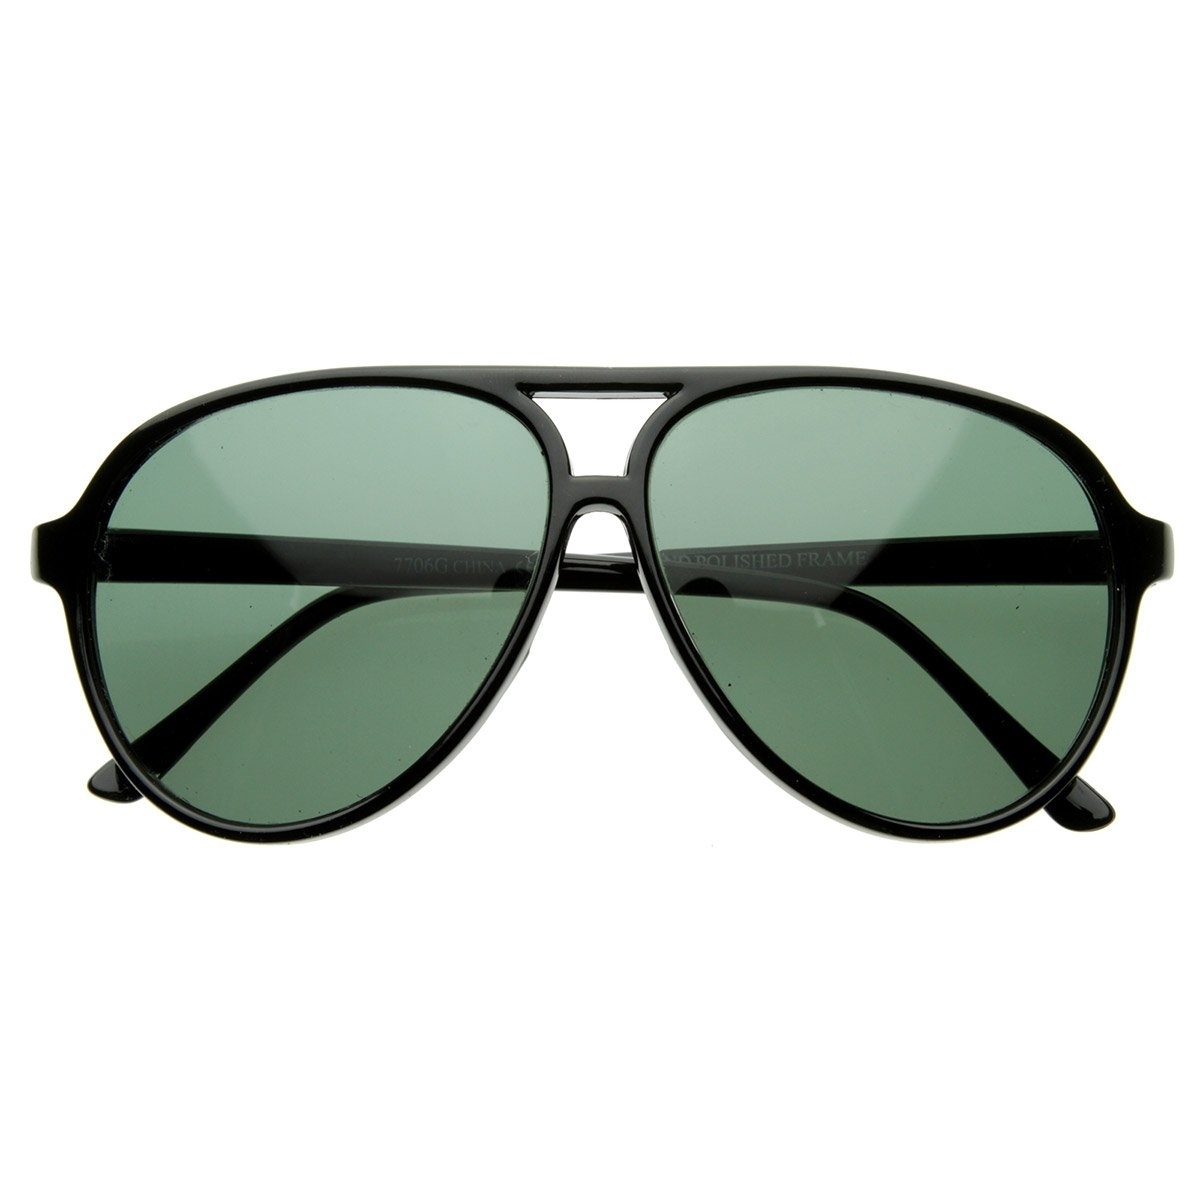 Vintage Inspired Classic Tear Drop Plastic Aviator Sunglasses - Black